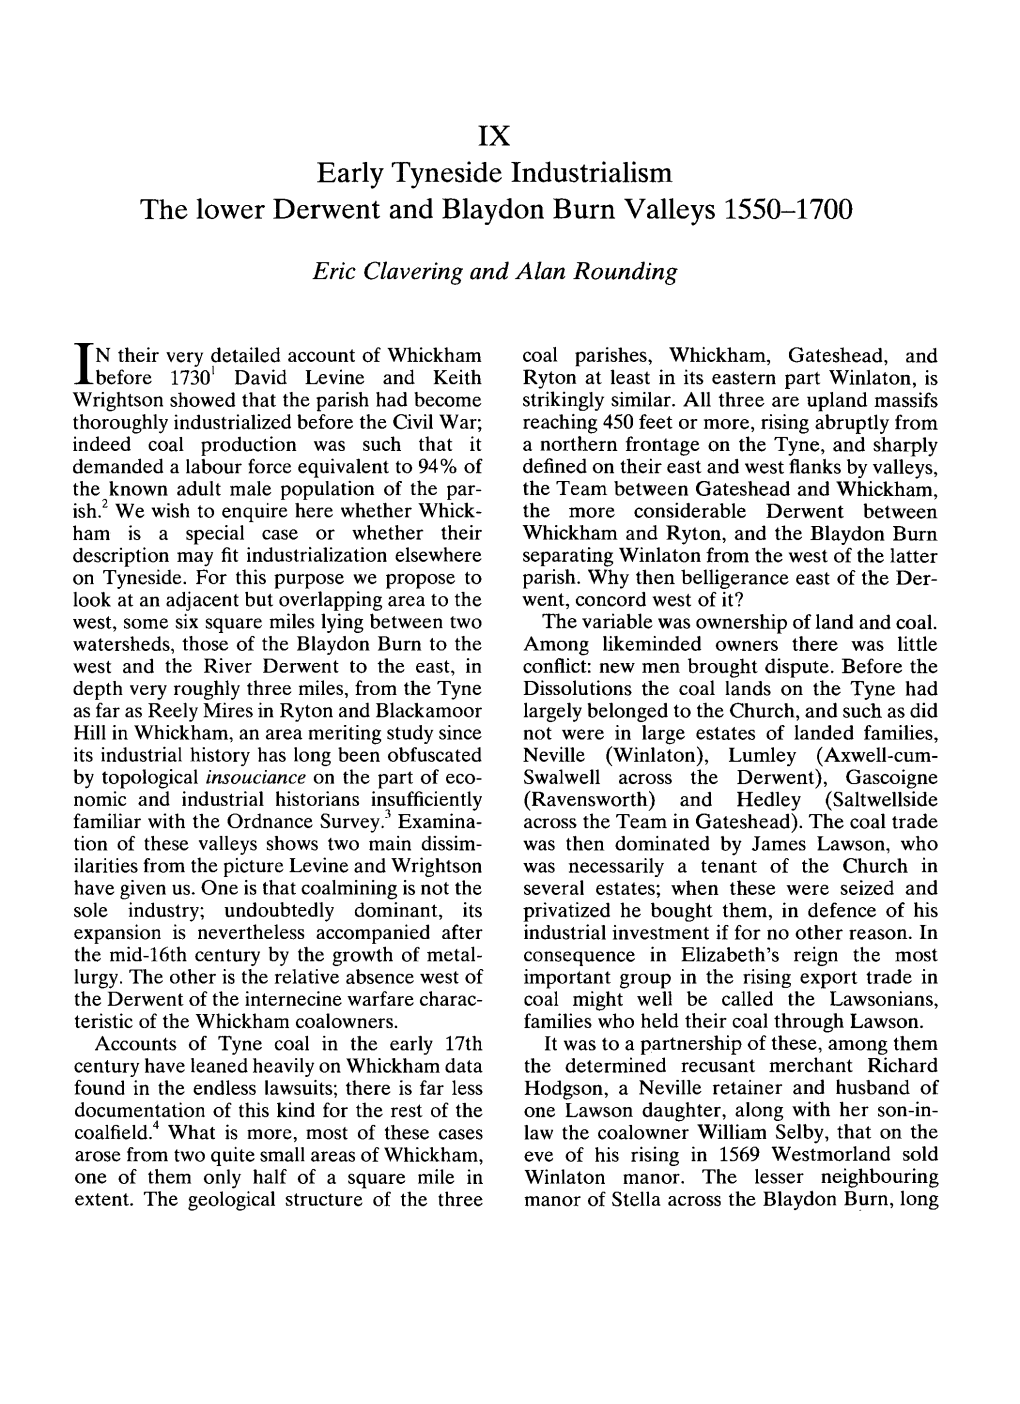 Early Tyneside Industrialism the Lower Derwent and Blaydon Burn Valleys 1550-1700